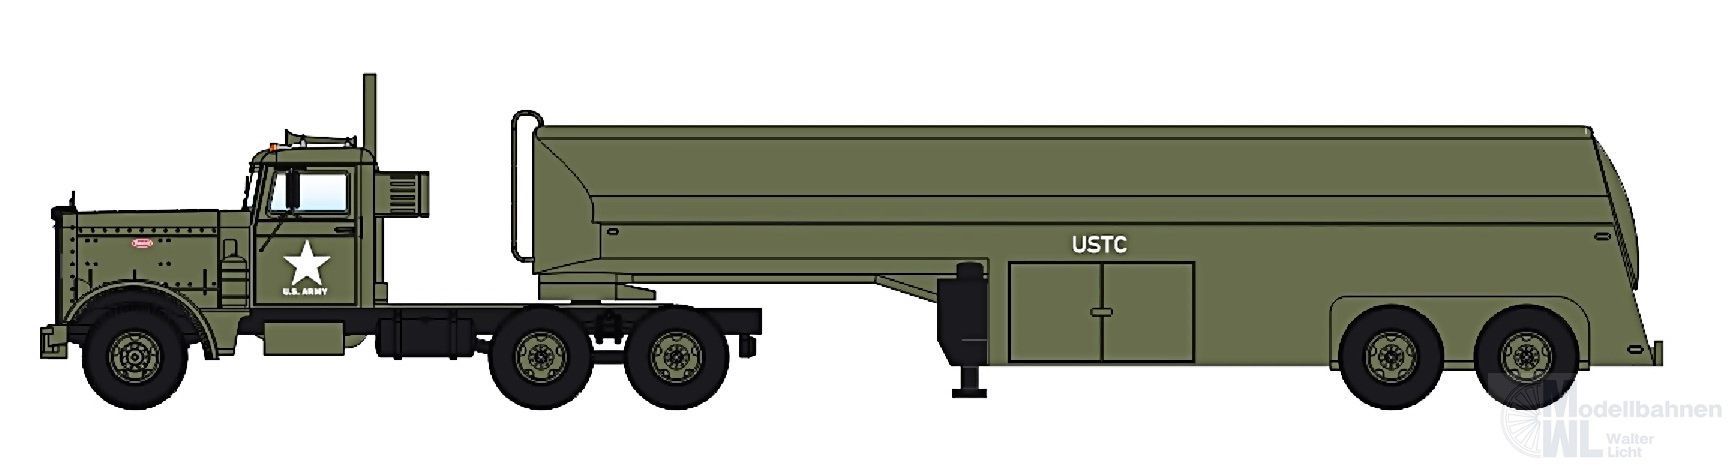 NPE NA99162 - Peterbilt US Army H0 1:87